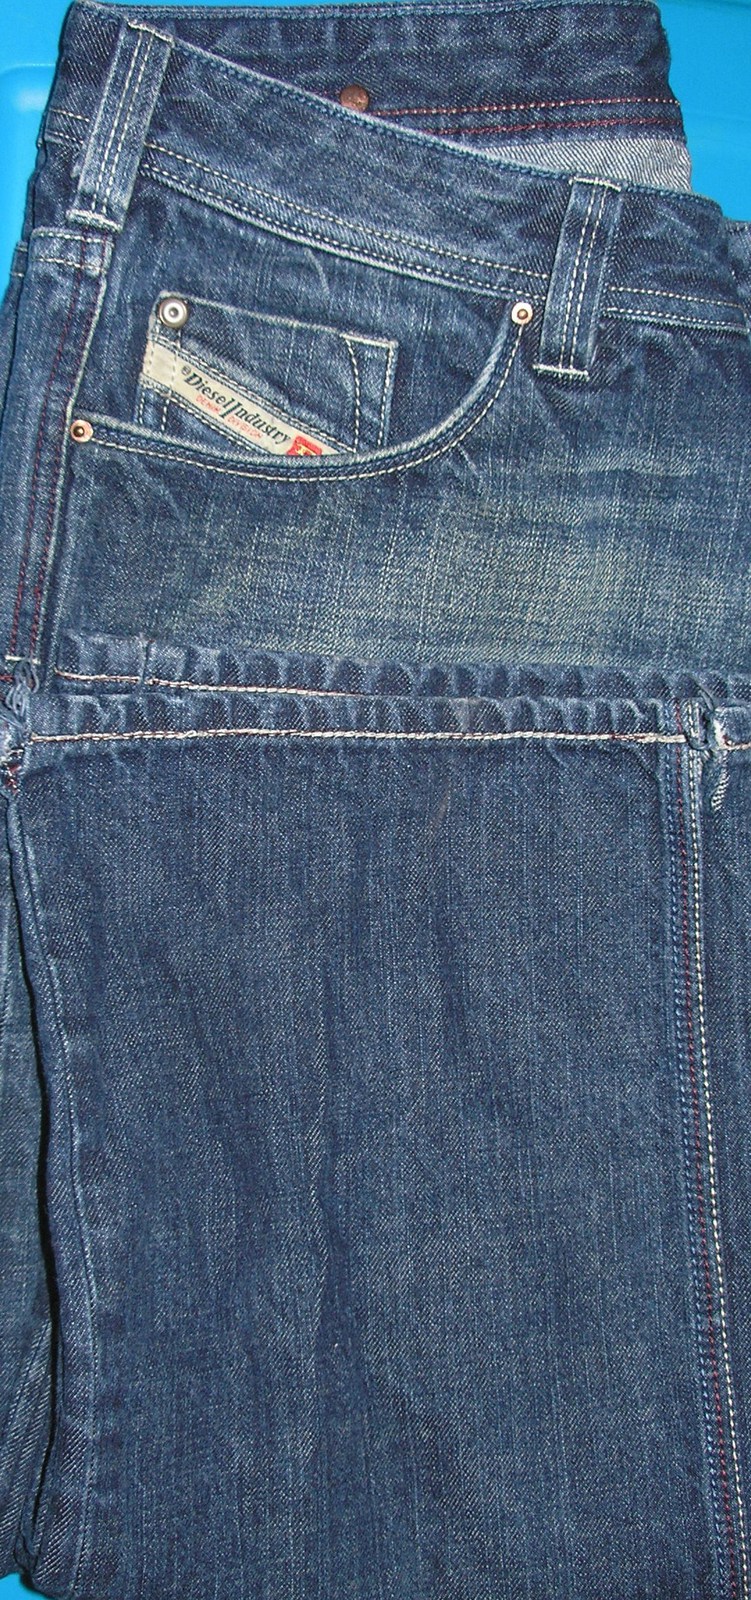 Diesel Industry Womens Button Fly Blue Jeans Size W 34 L 35 - Jeans